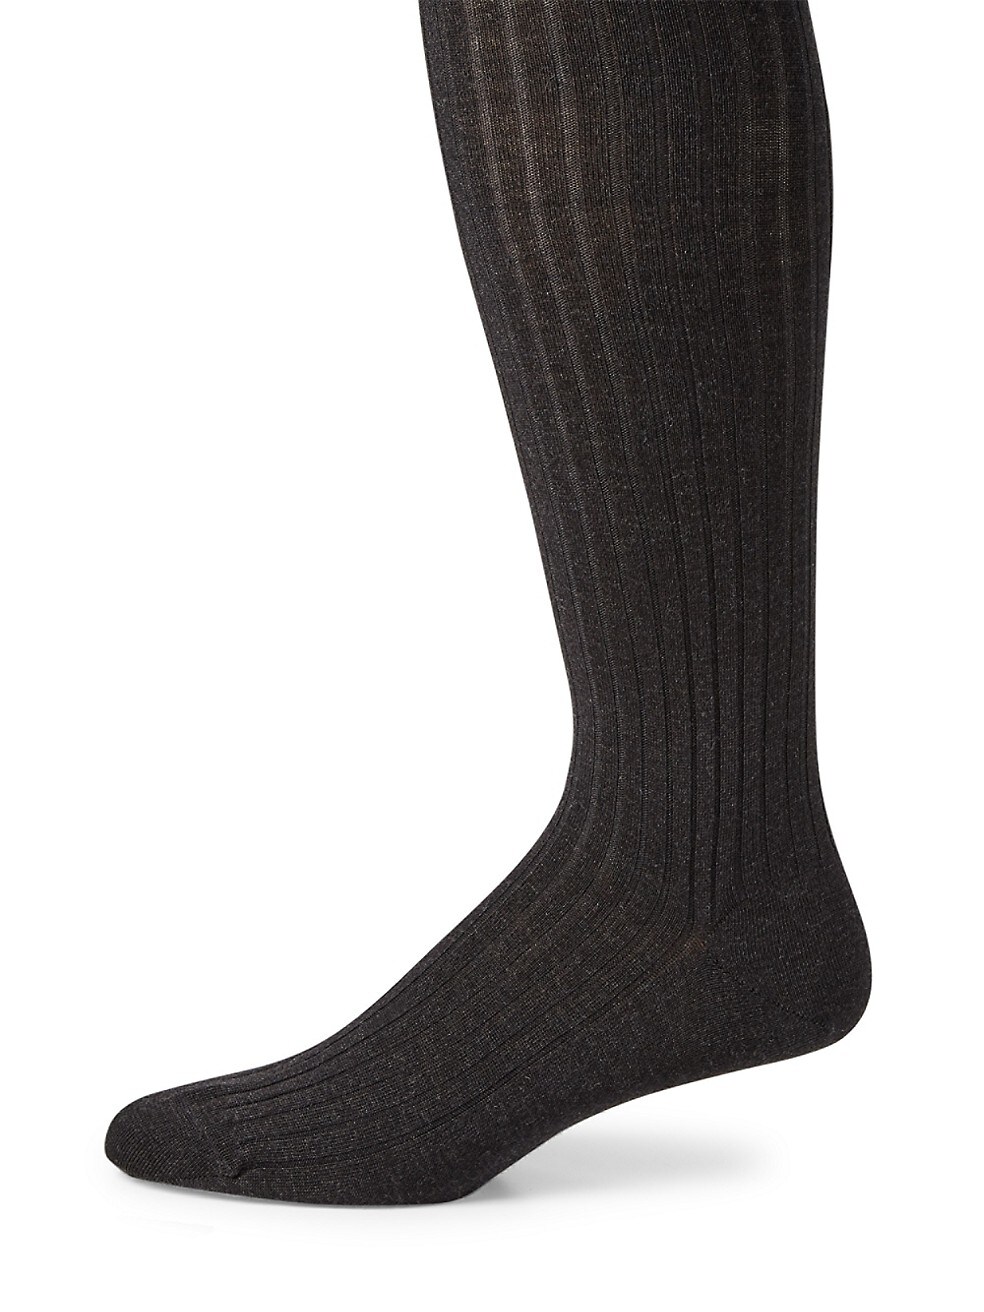 Marcoliani Charcoal Merino Ribbed Over-the-Calf Dress Socks